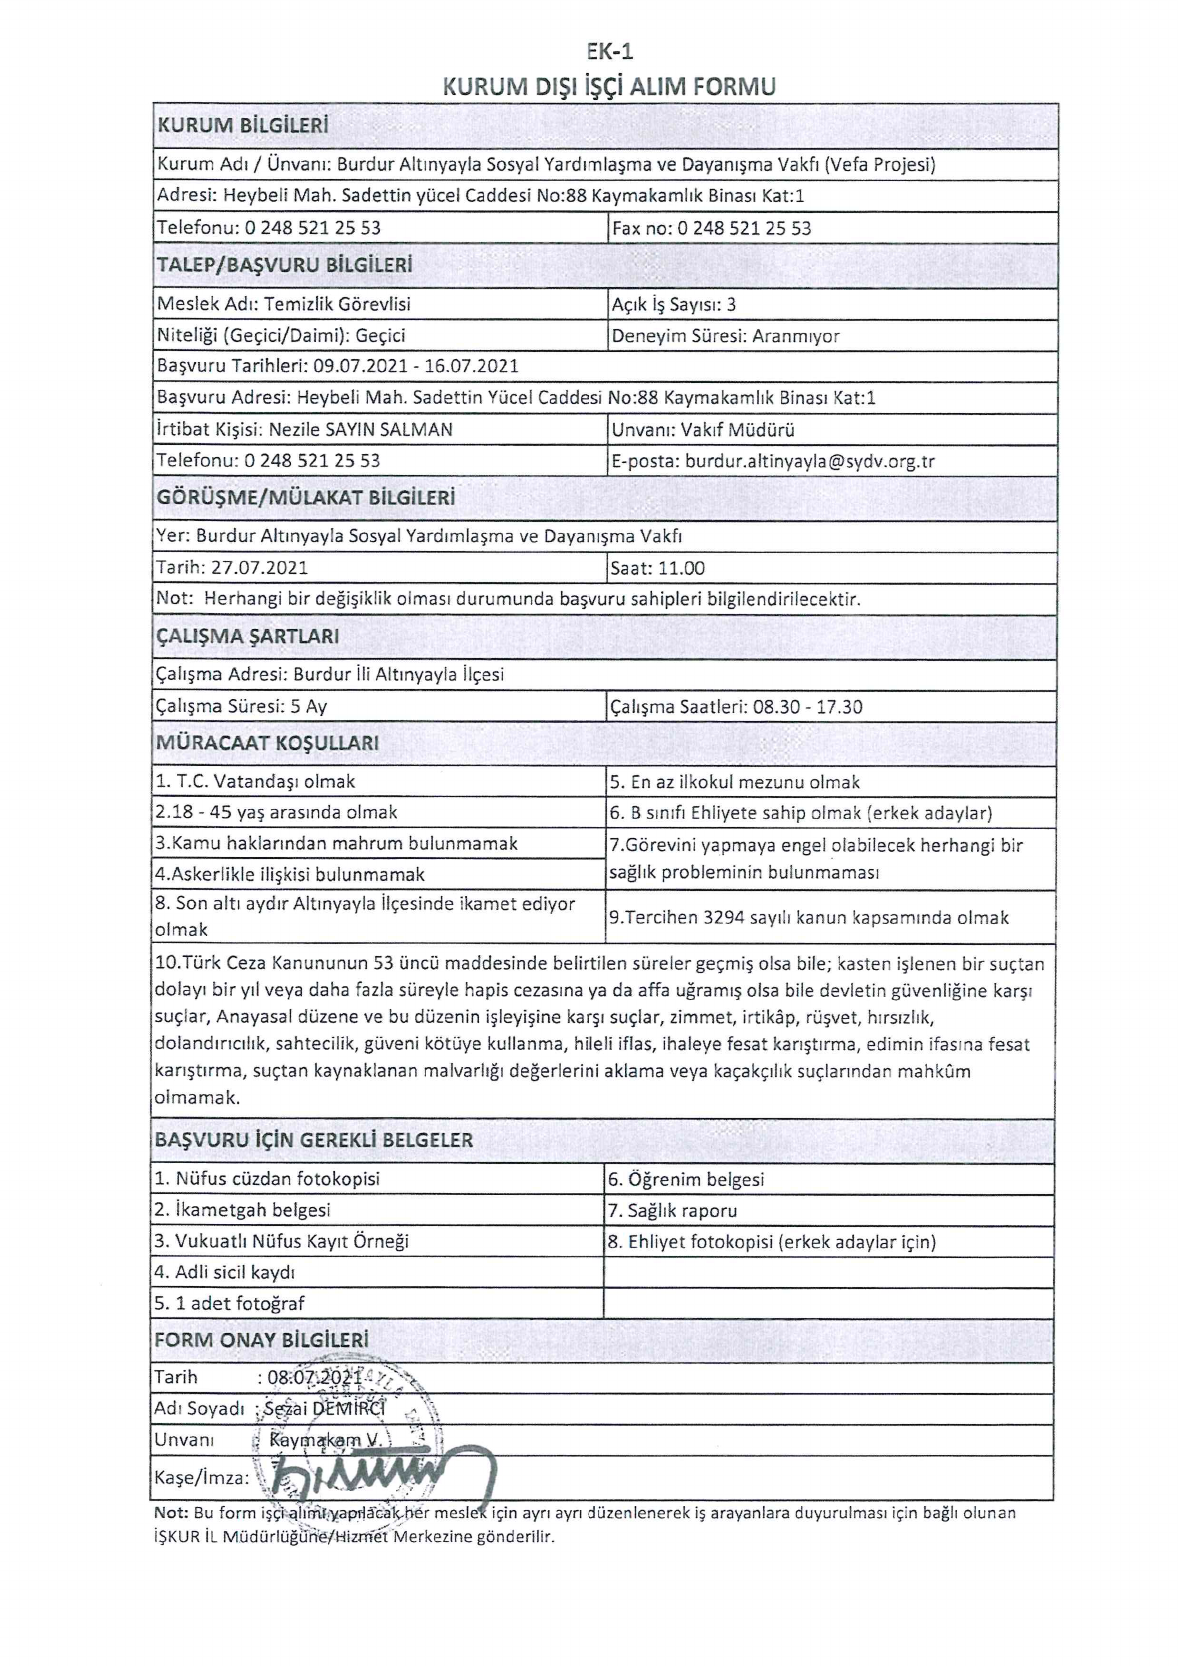 burdur-altinyayla-sydv-16-07-2021-000001.png